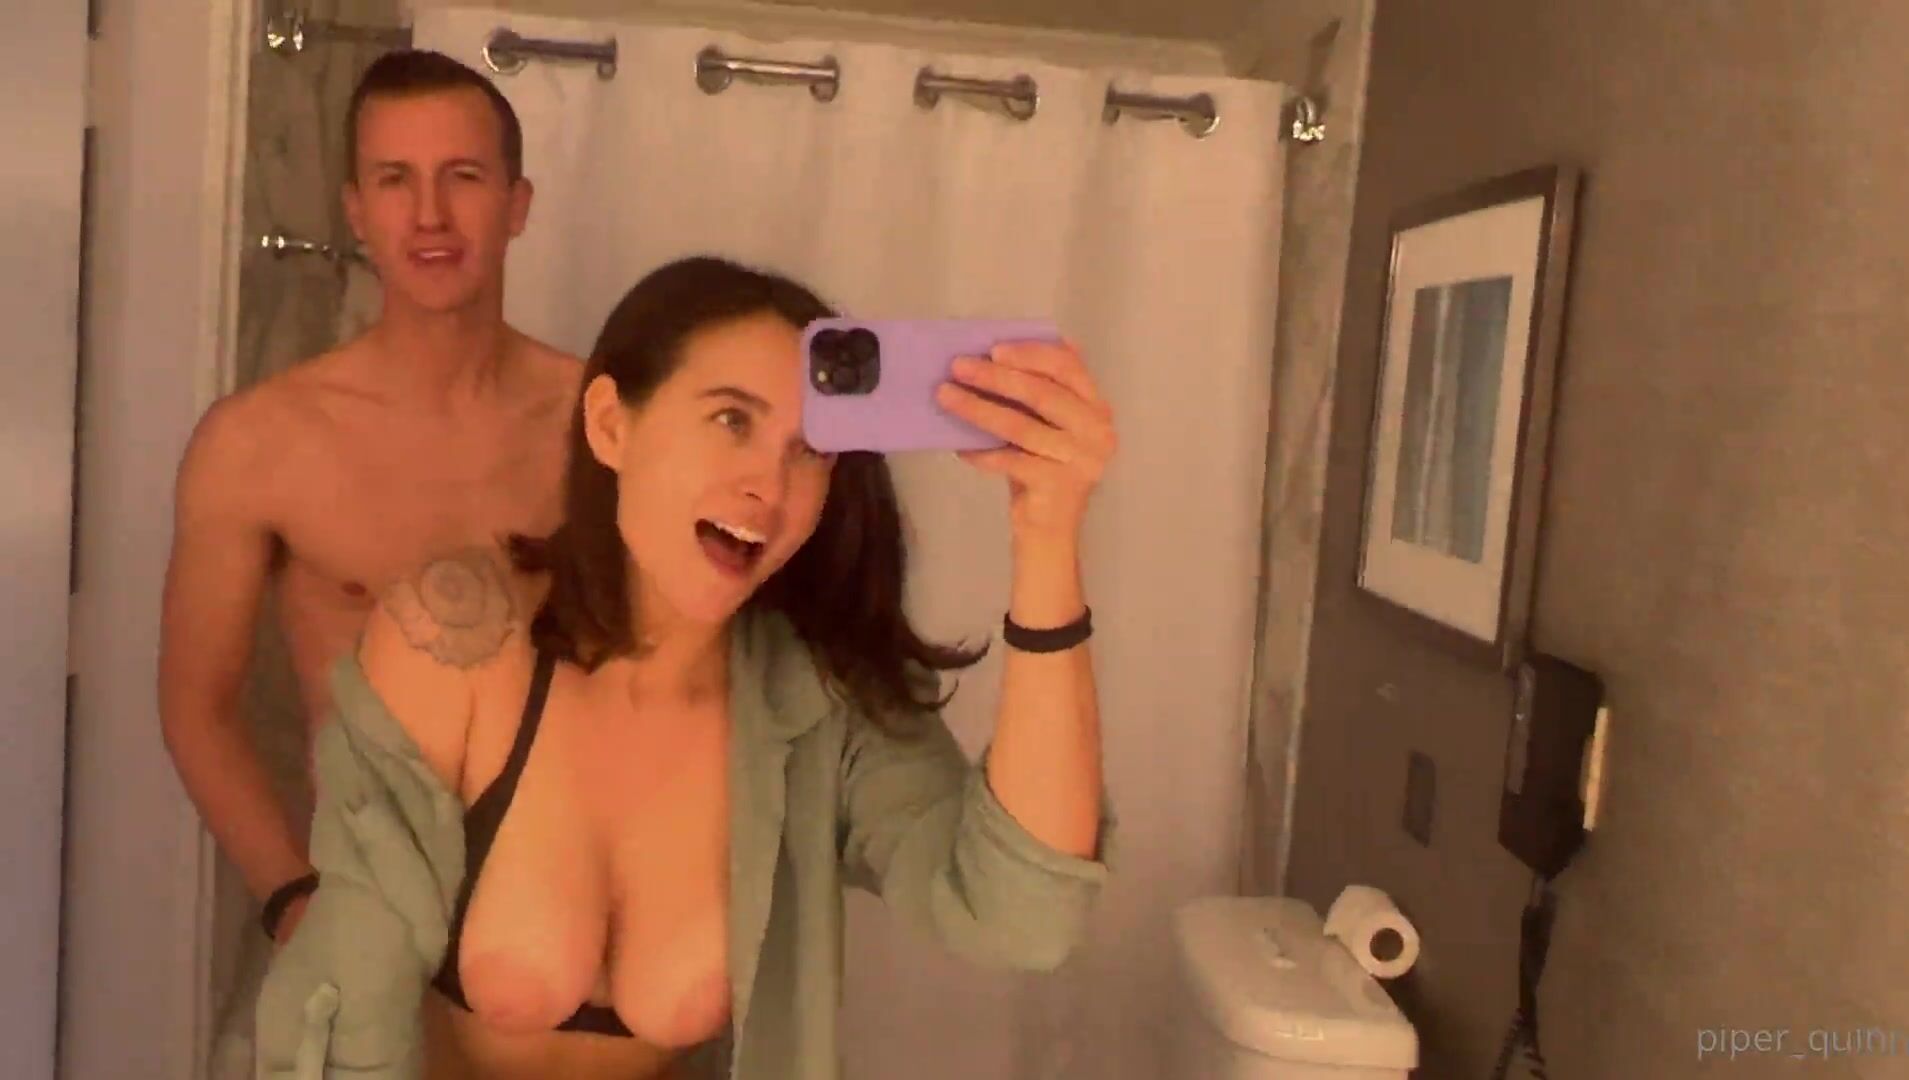 Piper Quinn nude bathroom sex tape ppv video